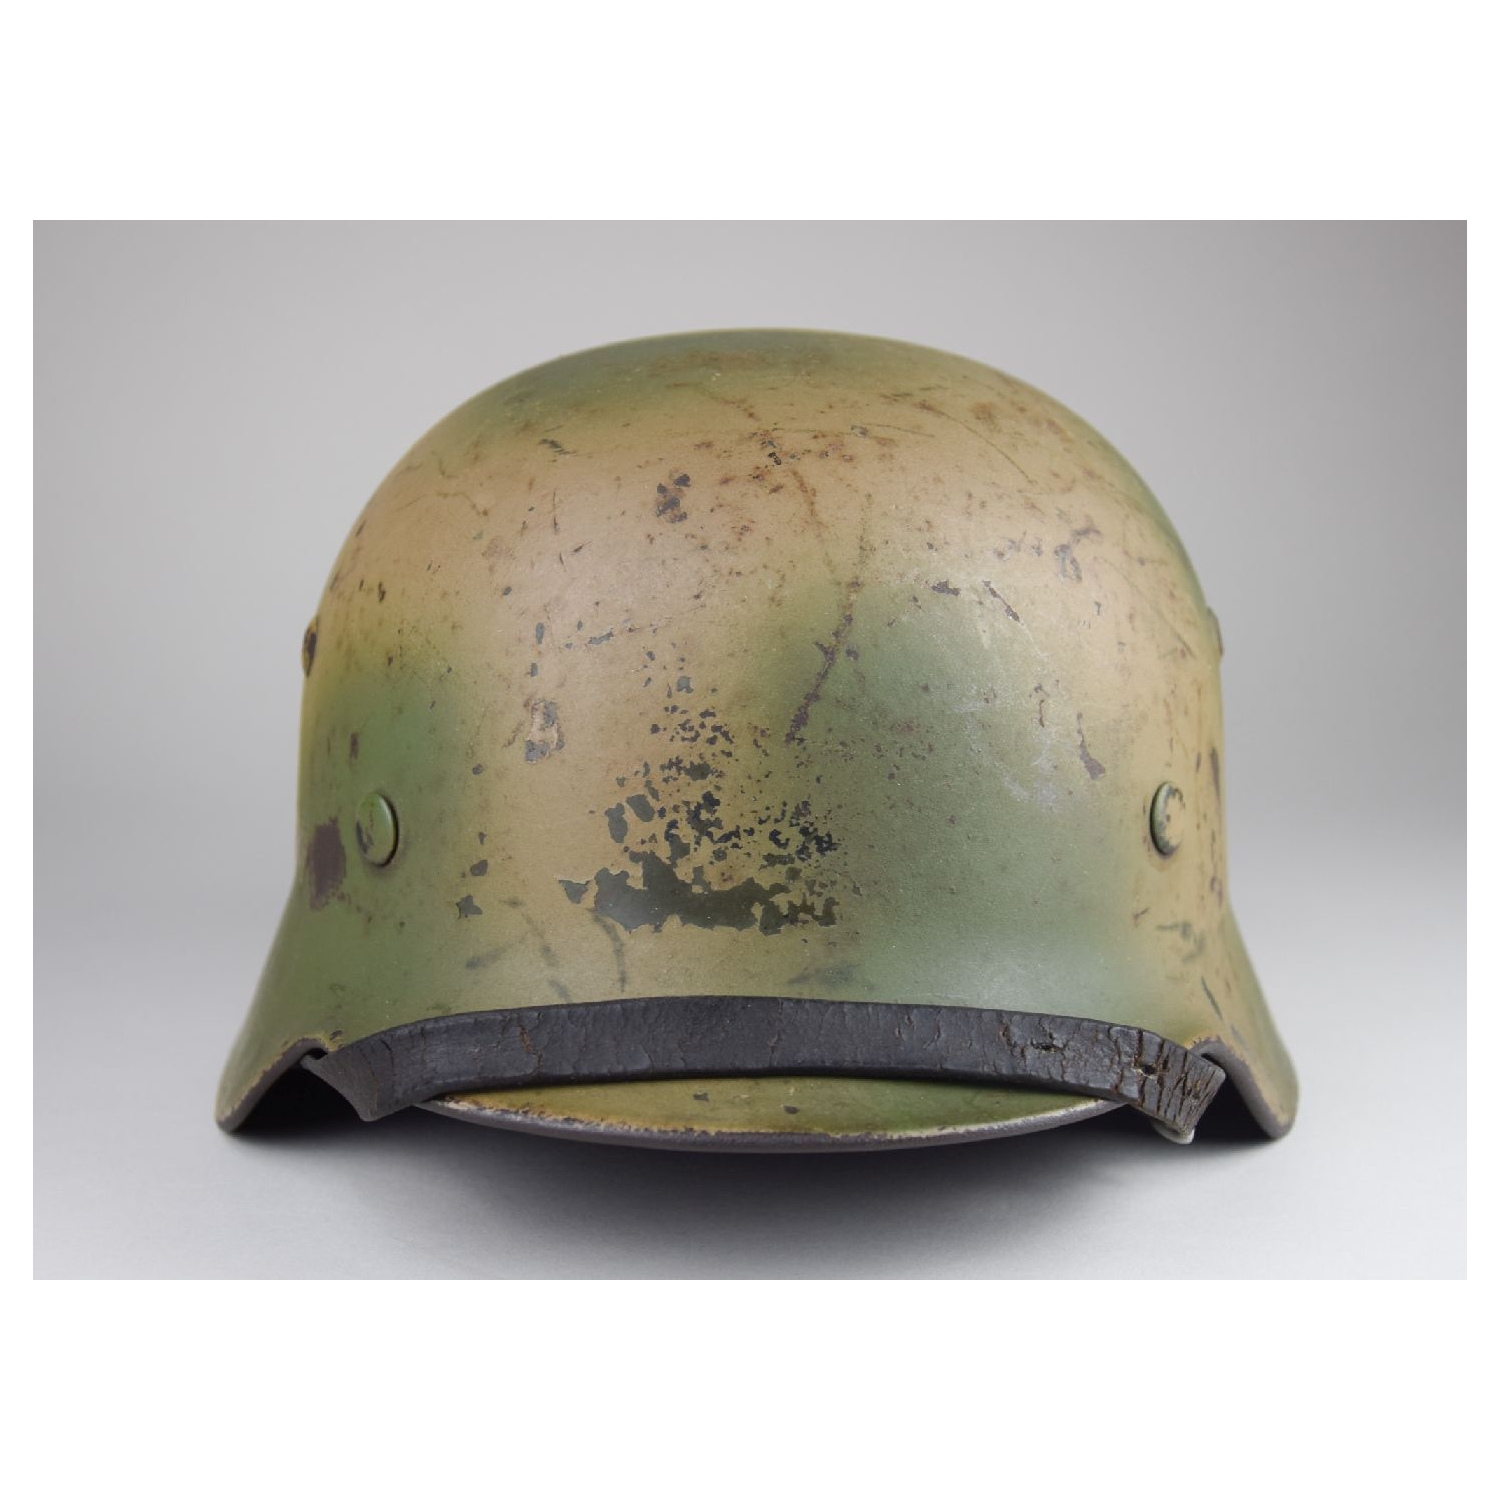 M35 Lutwaffe Stahlhelm Normandy Camouflage